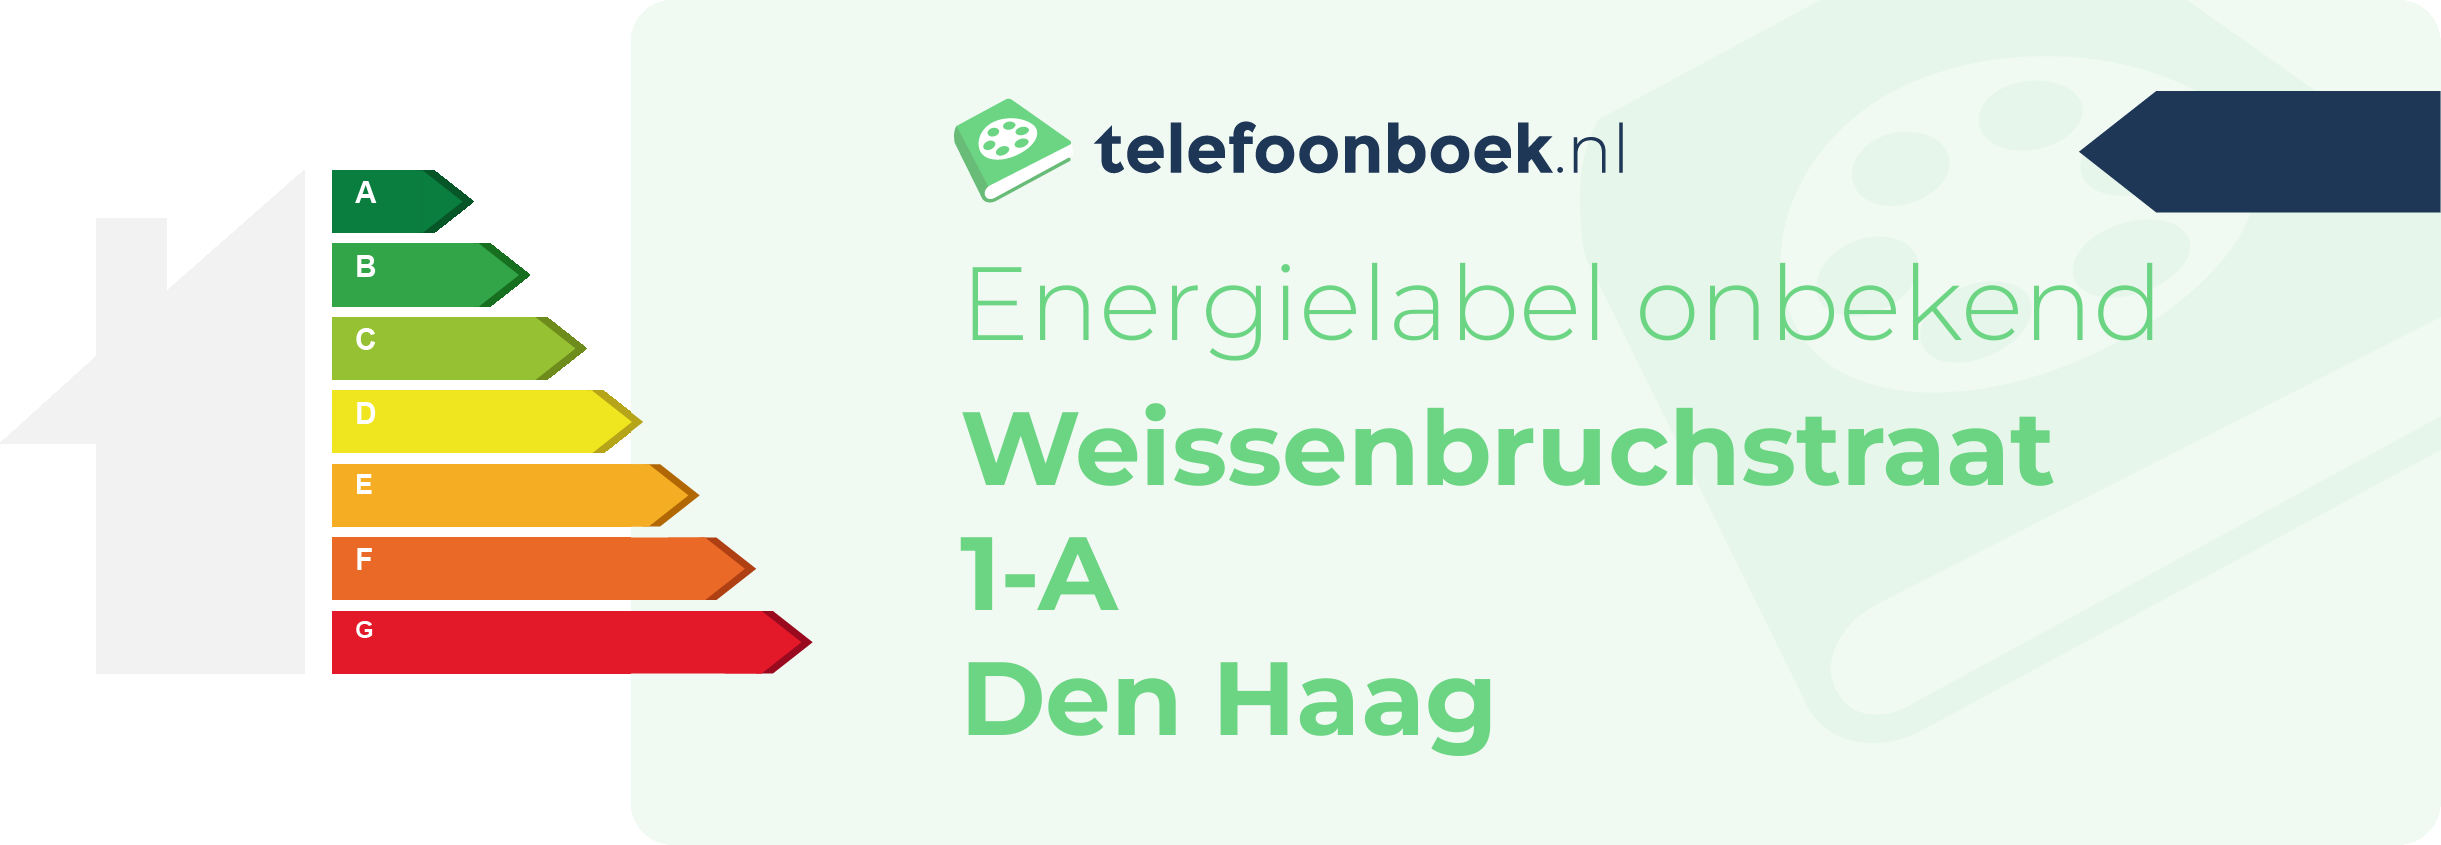 Energielabel Weissenbruchstraat 1-A Den Haag